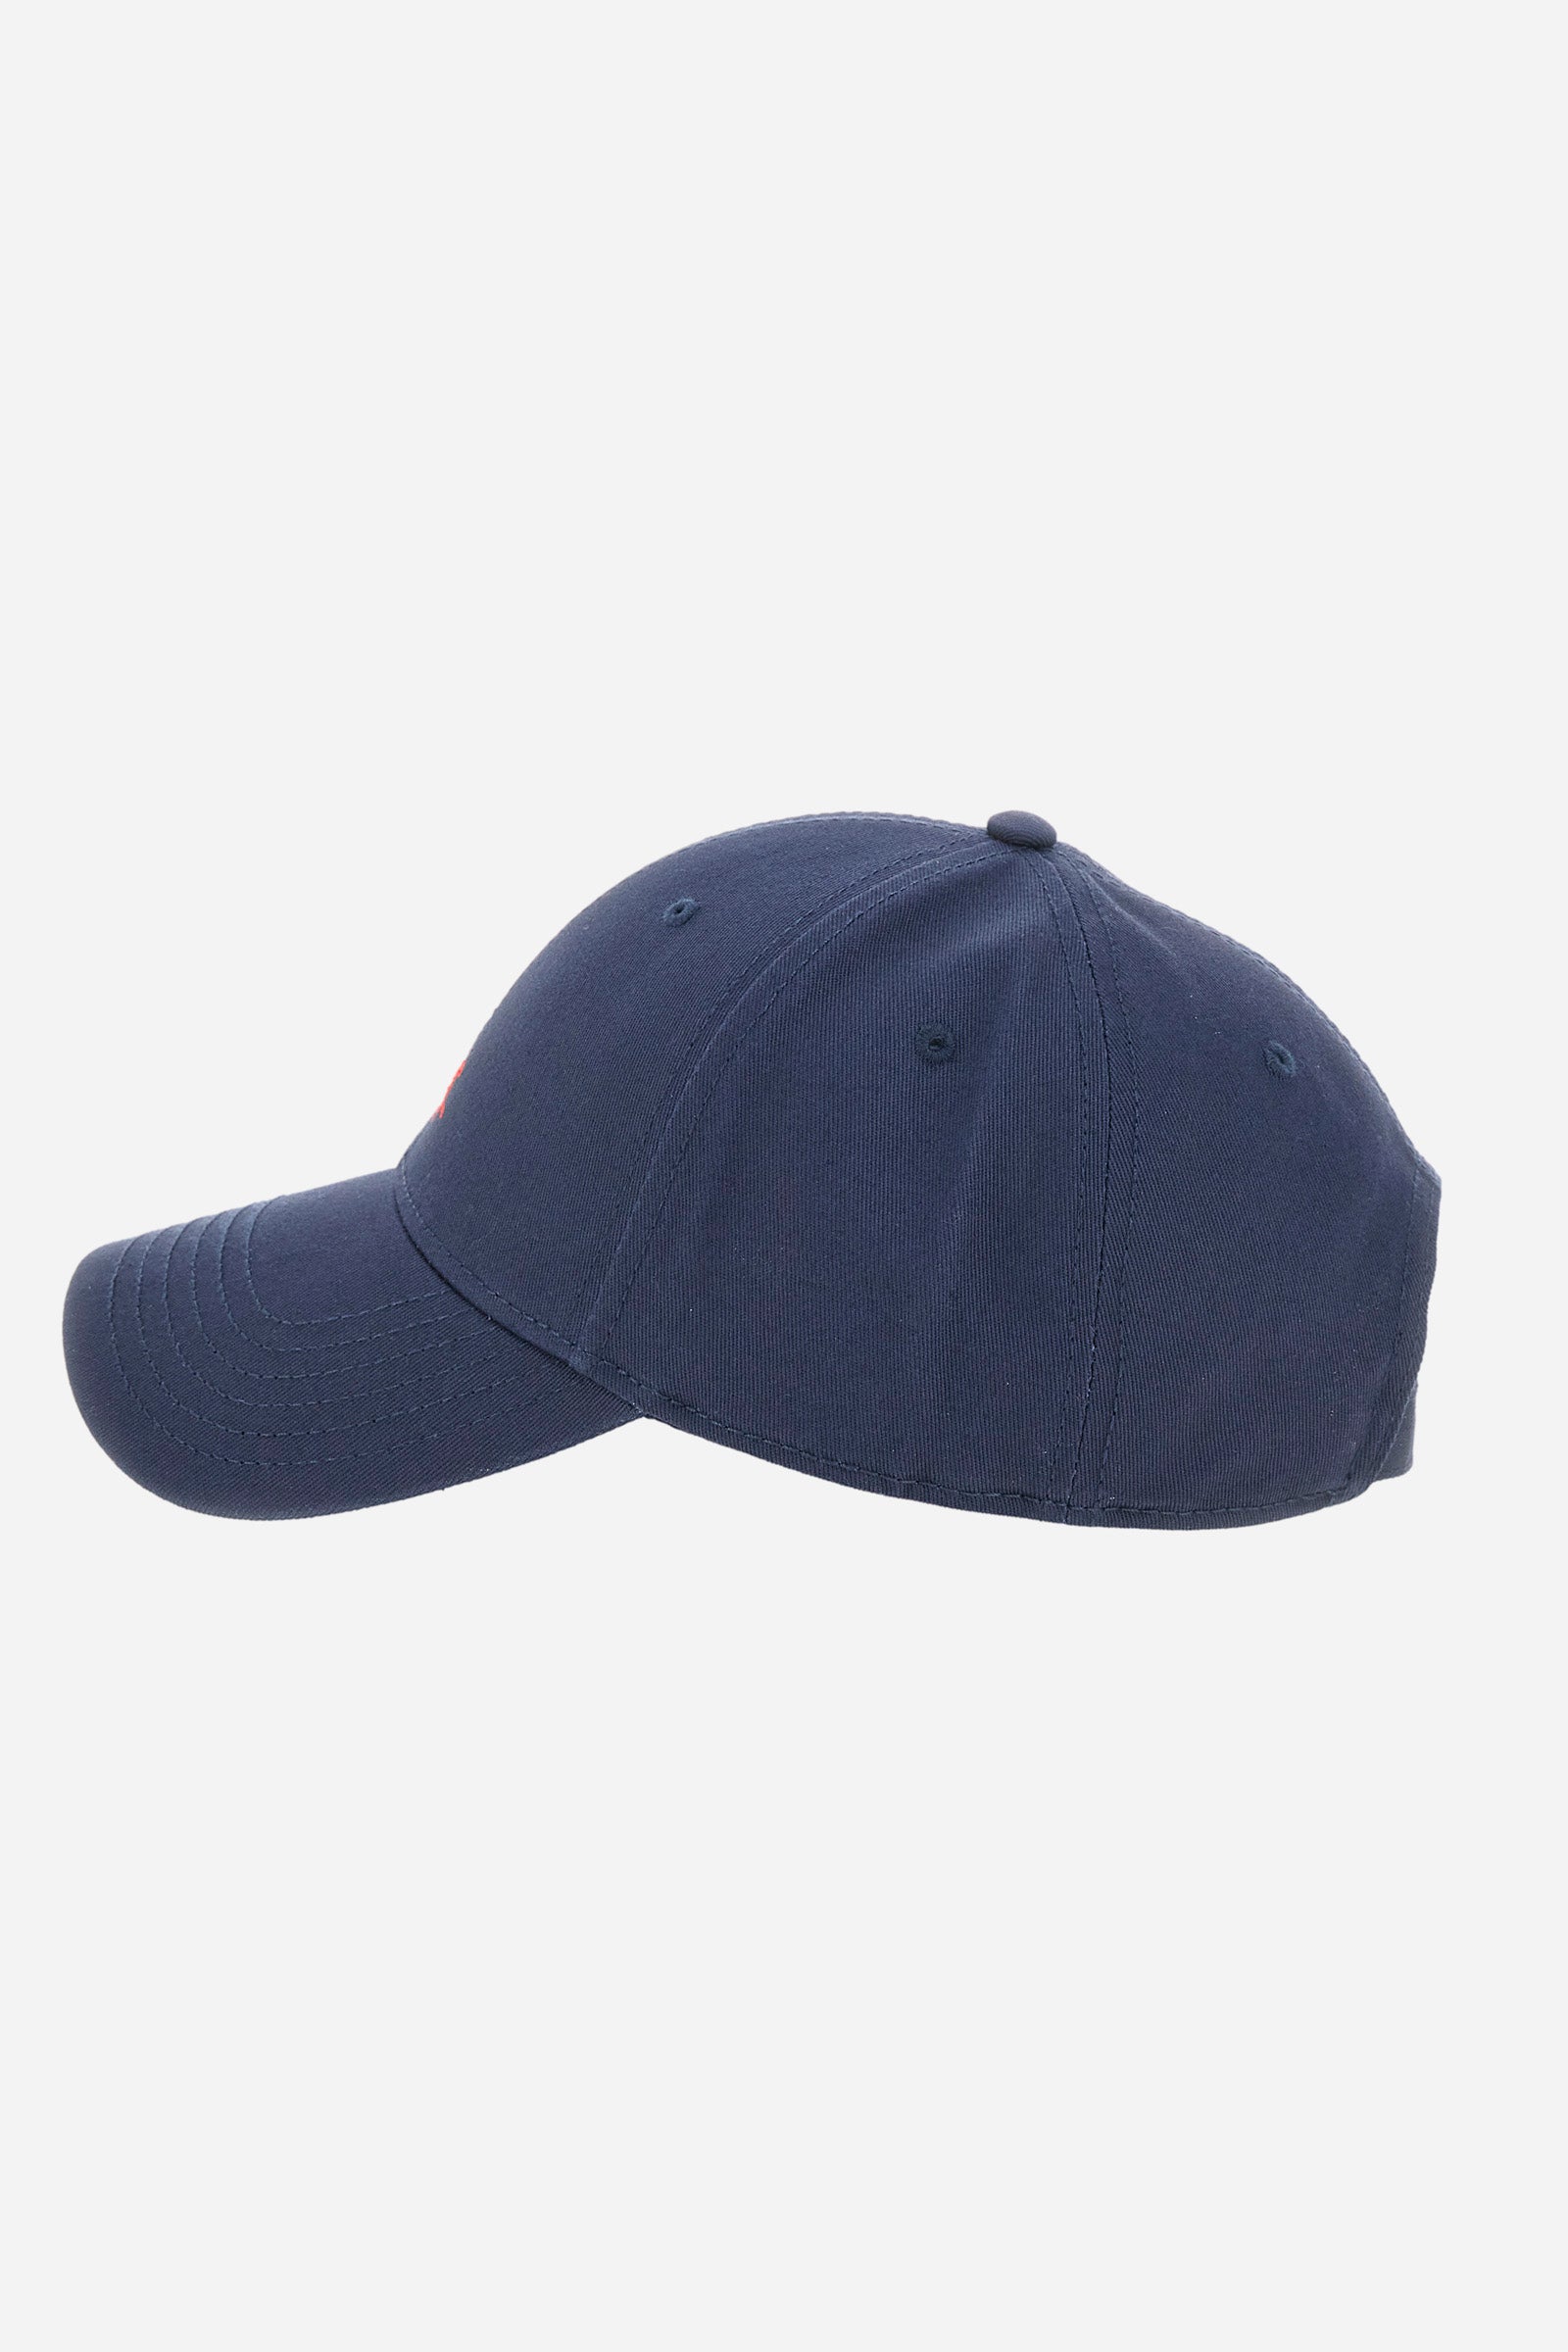 Unisex baseball cap in twill cotton